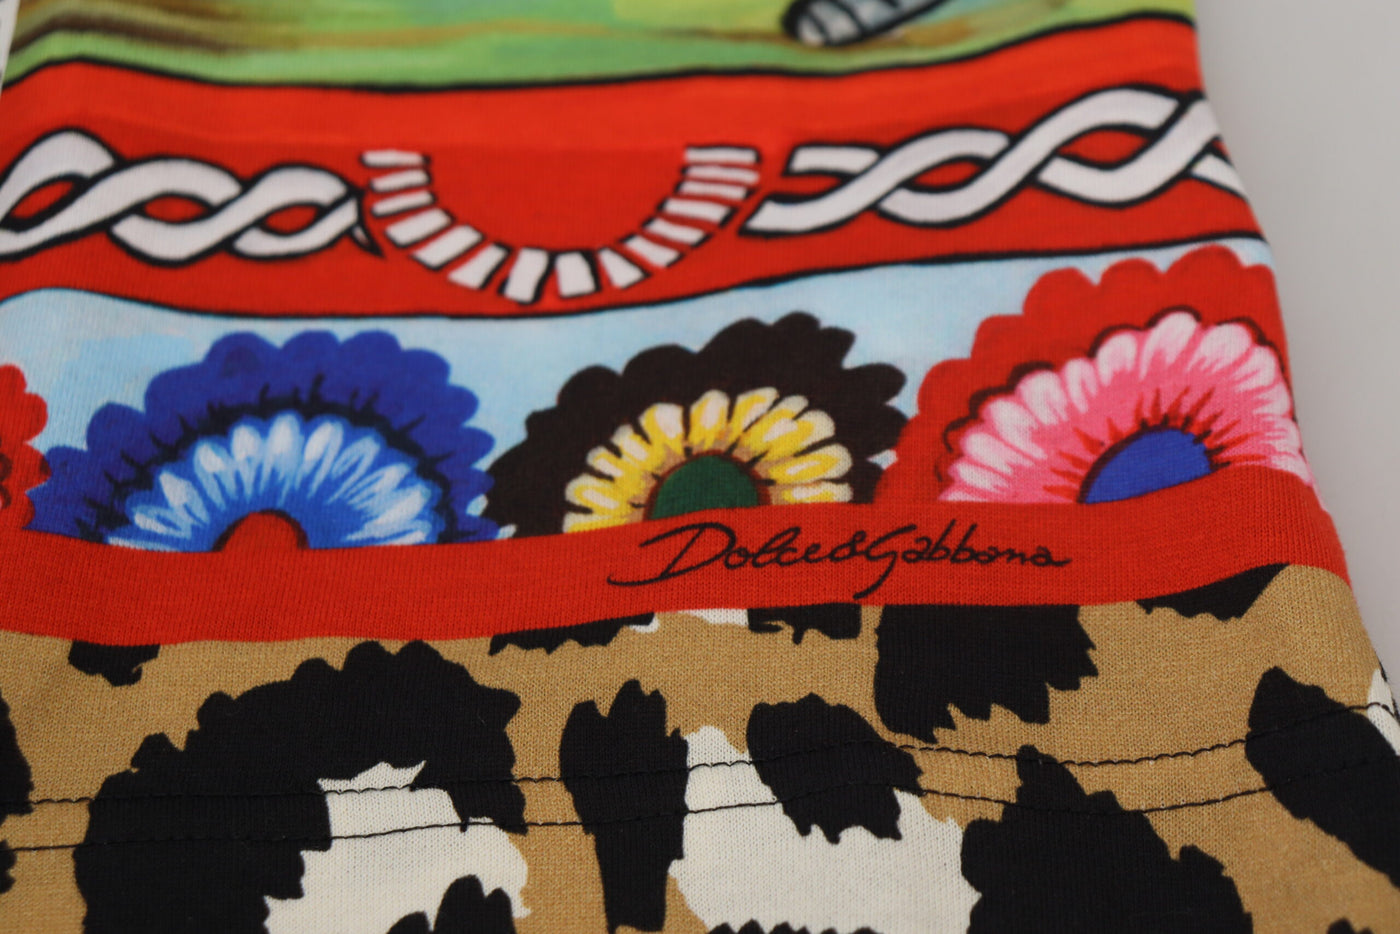 Dolce & Gabbana Multicolor Printed Women Exclusive Shirt Top